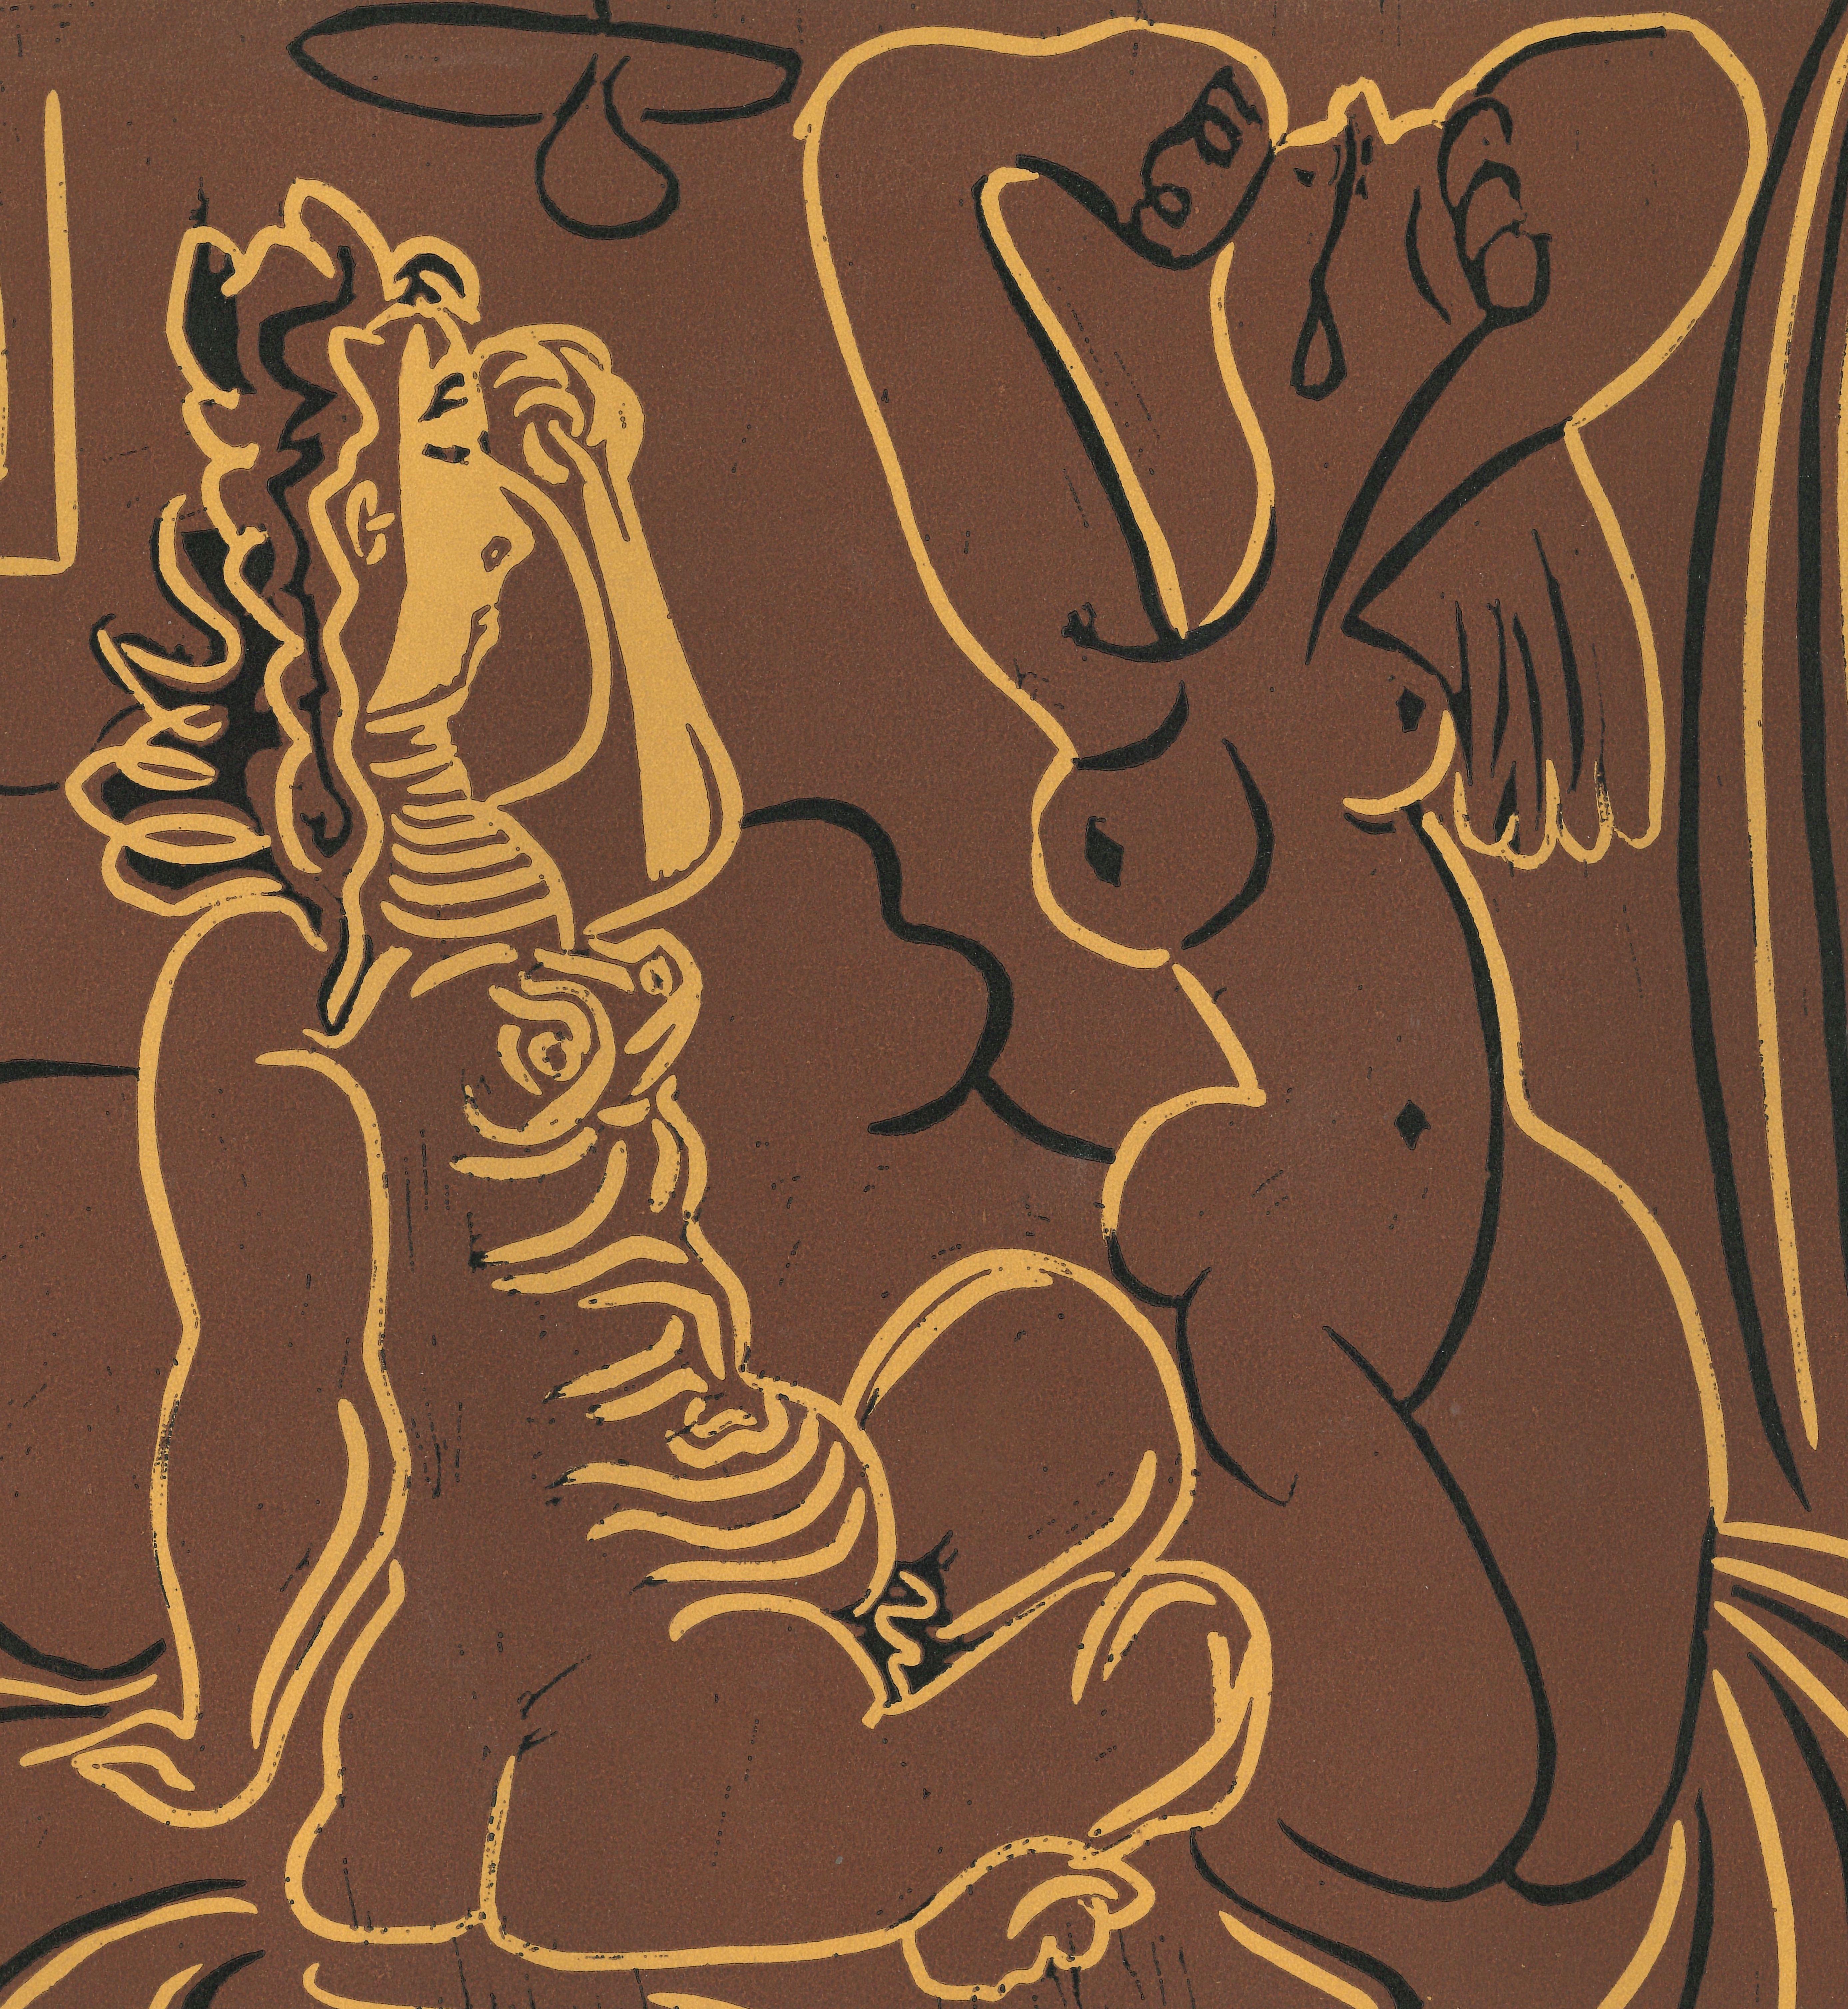 Trois Femmes - Linocut Reproduction After Pablo Picasso - 1962 - Print by (after) Pablo Picasso